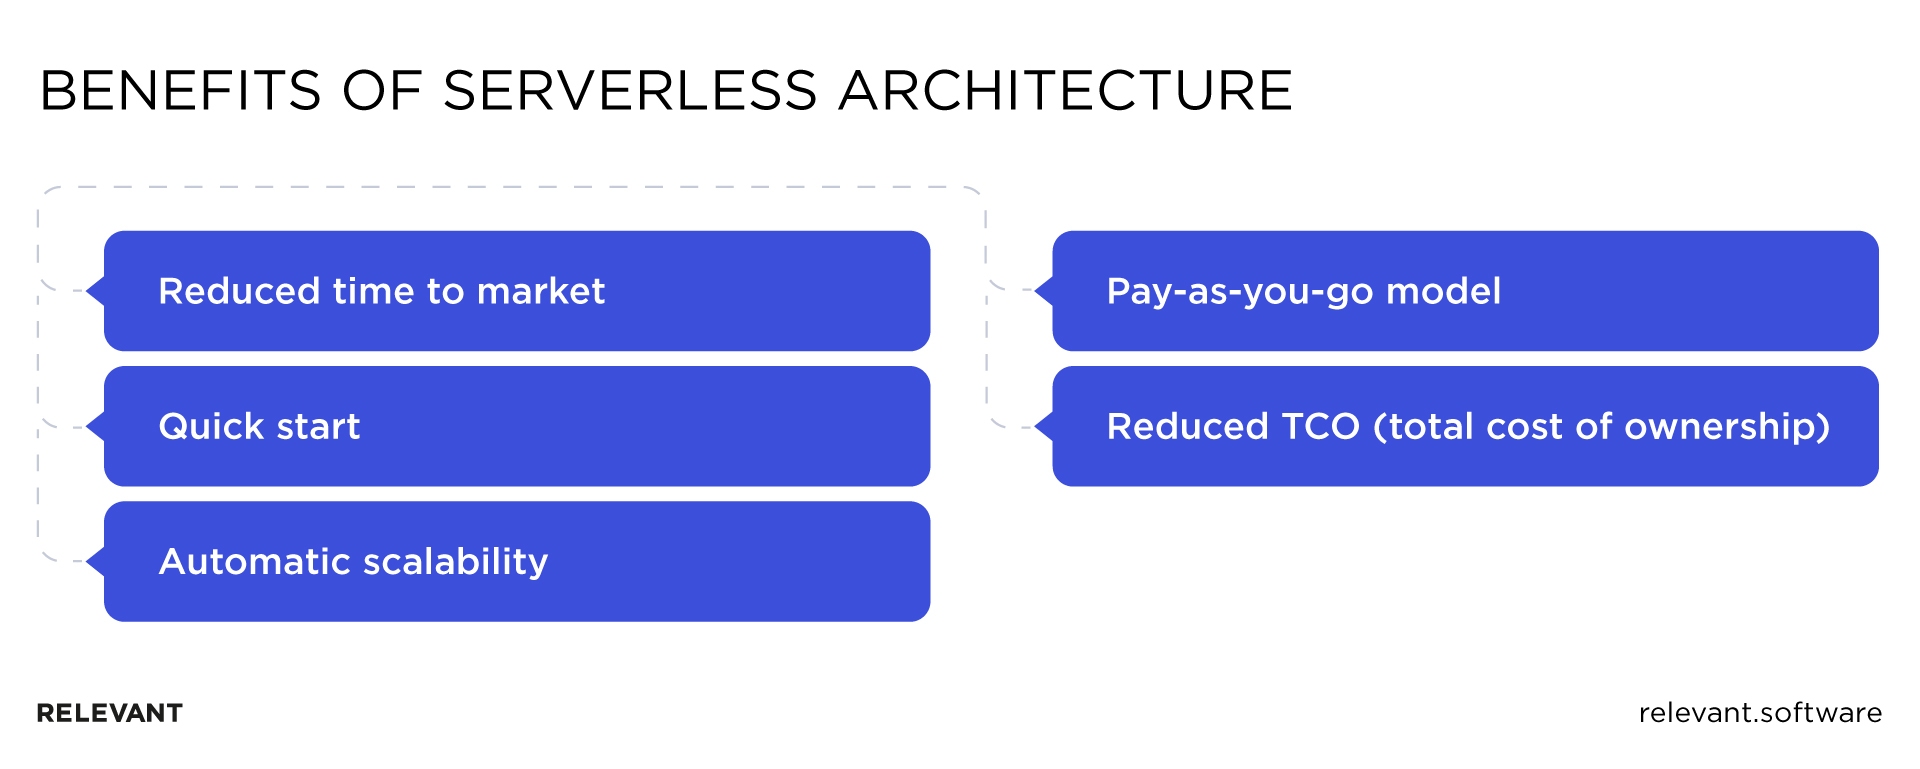 Benefits of serverless architecture